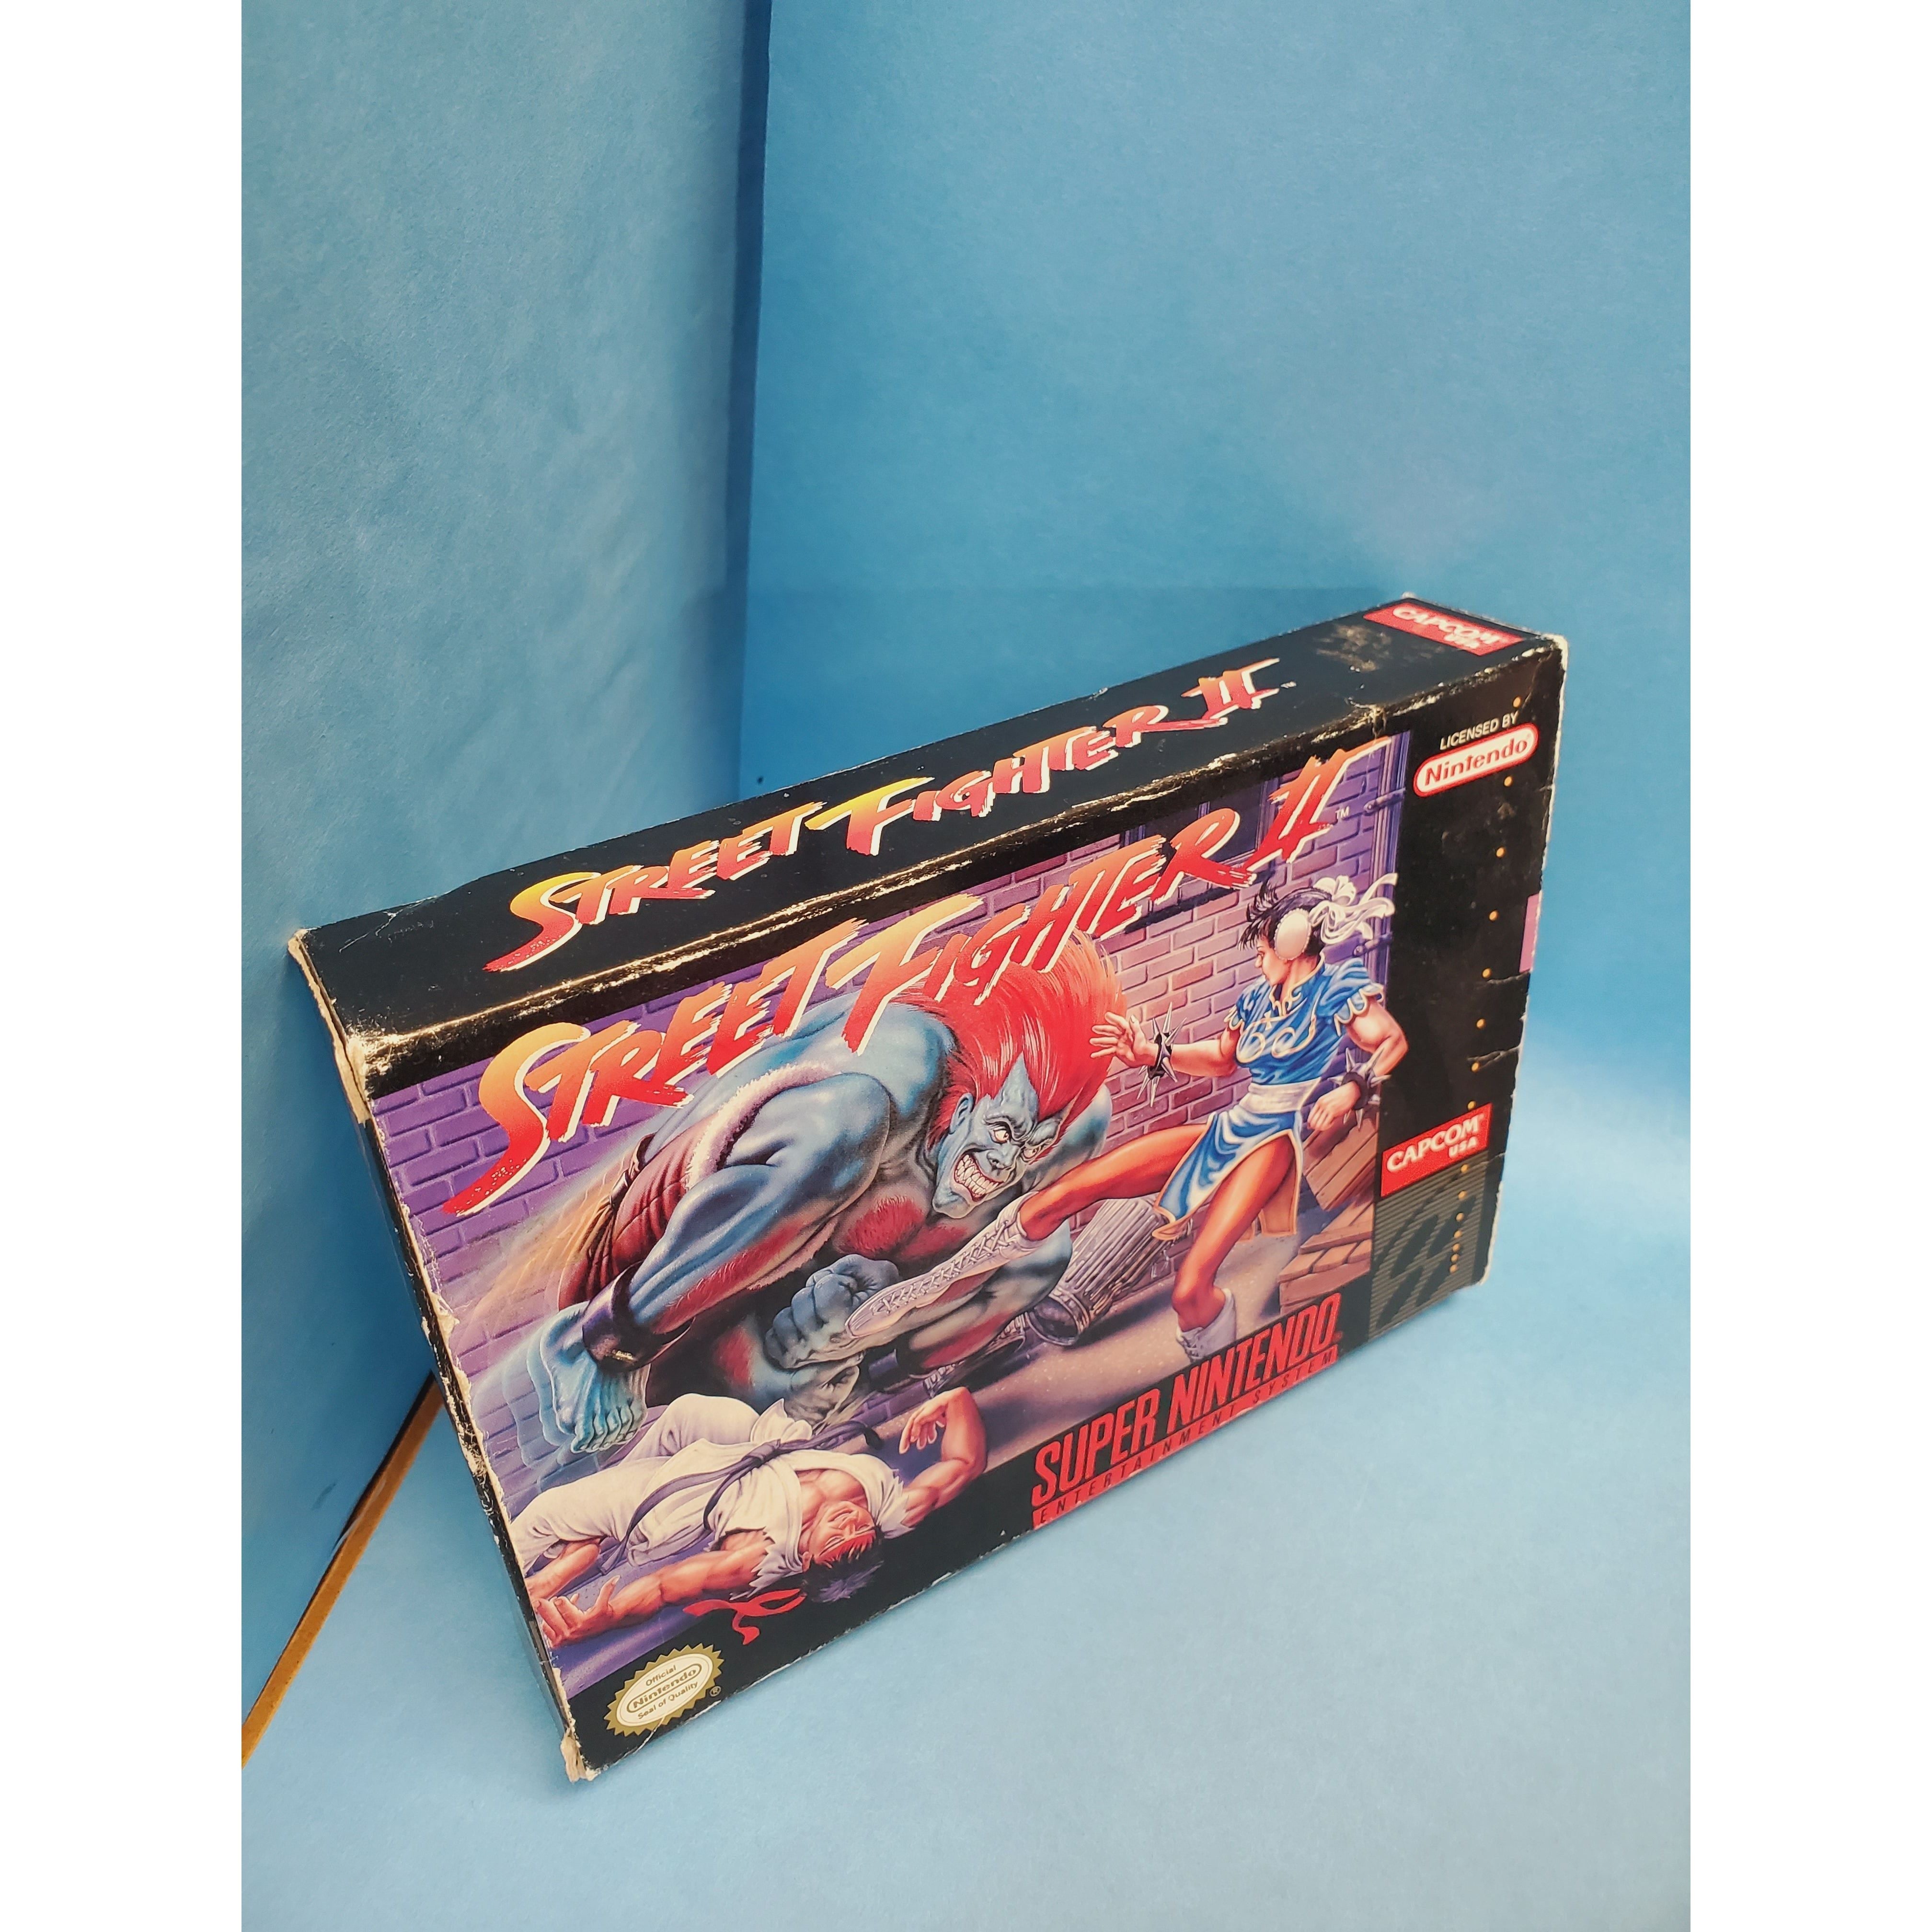 SNES - Street Fighter II (Complete in Box)